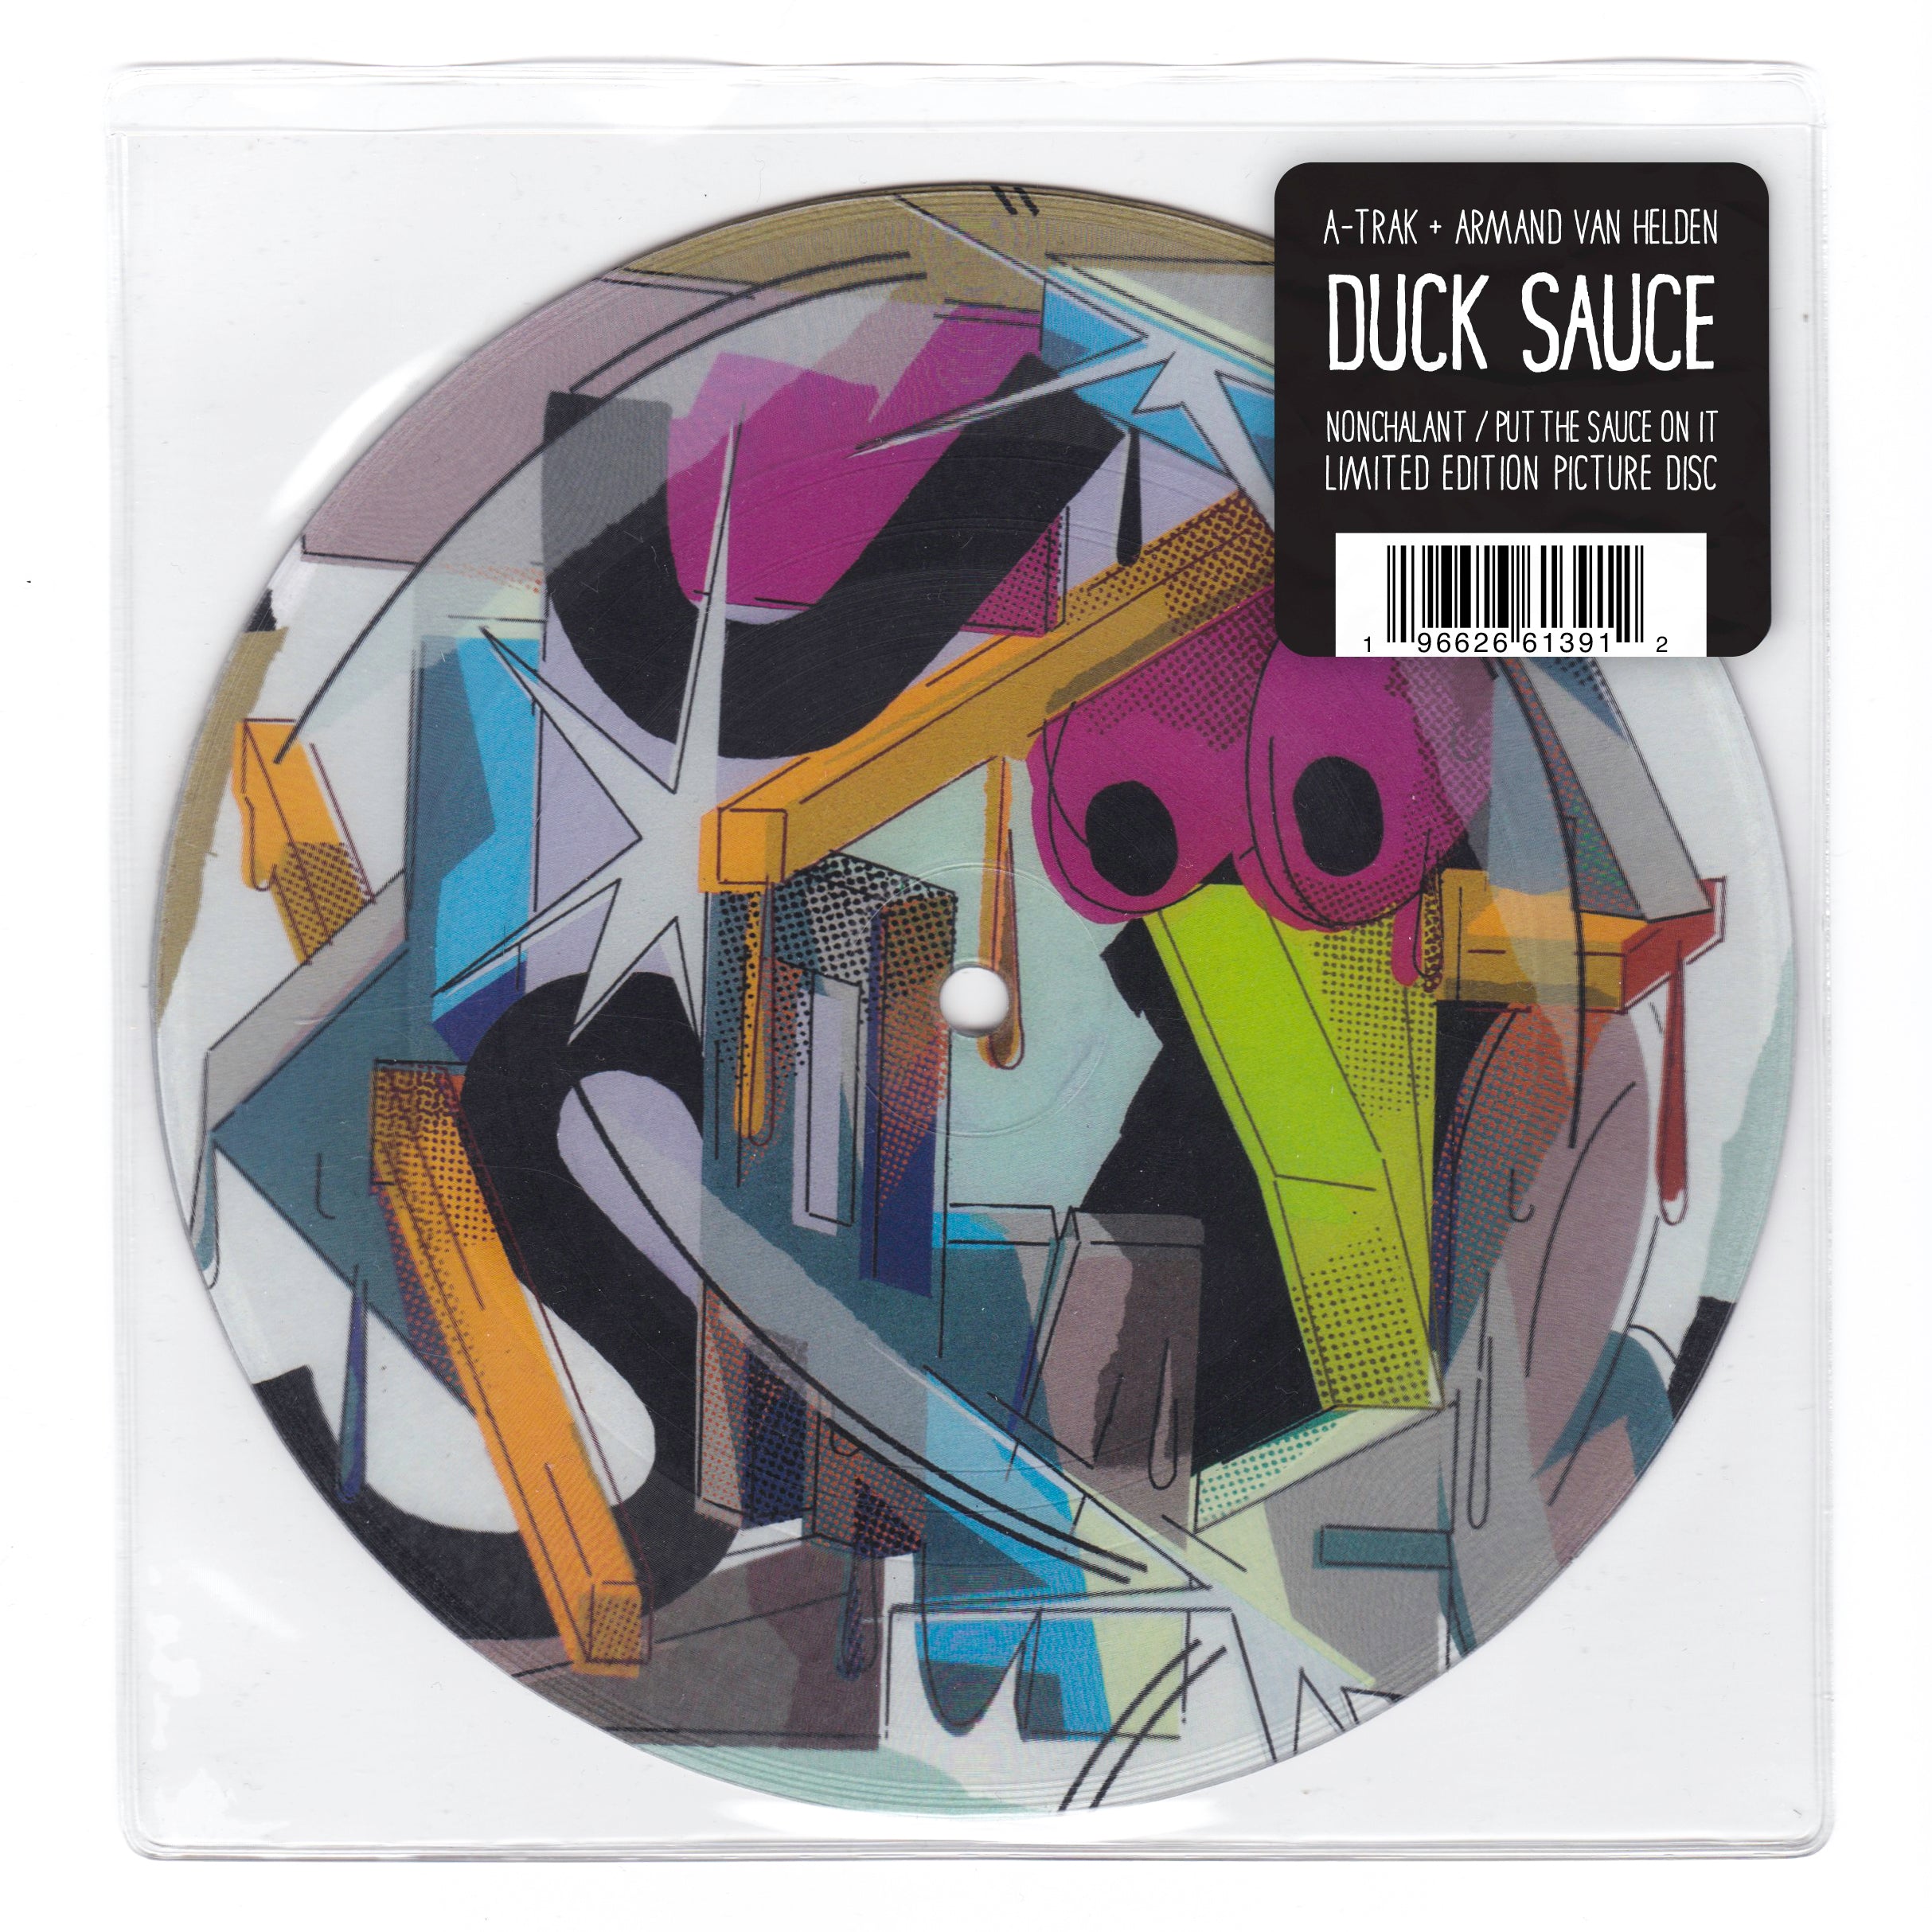 Duck Sauce “Nonchalant / Put The Sauce On It” Picture Disc